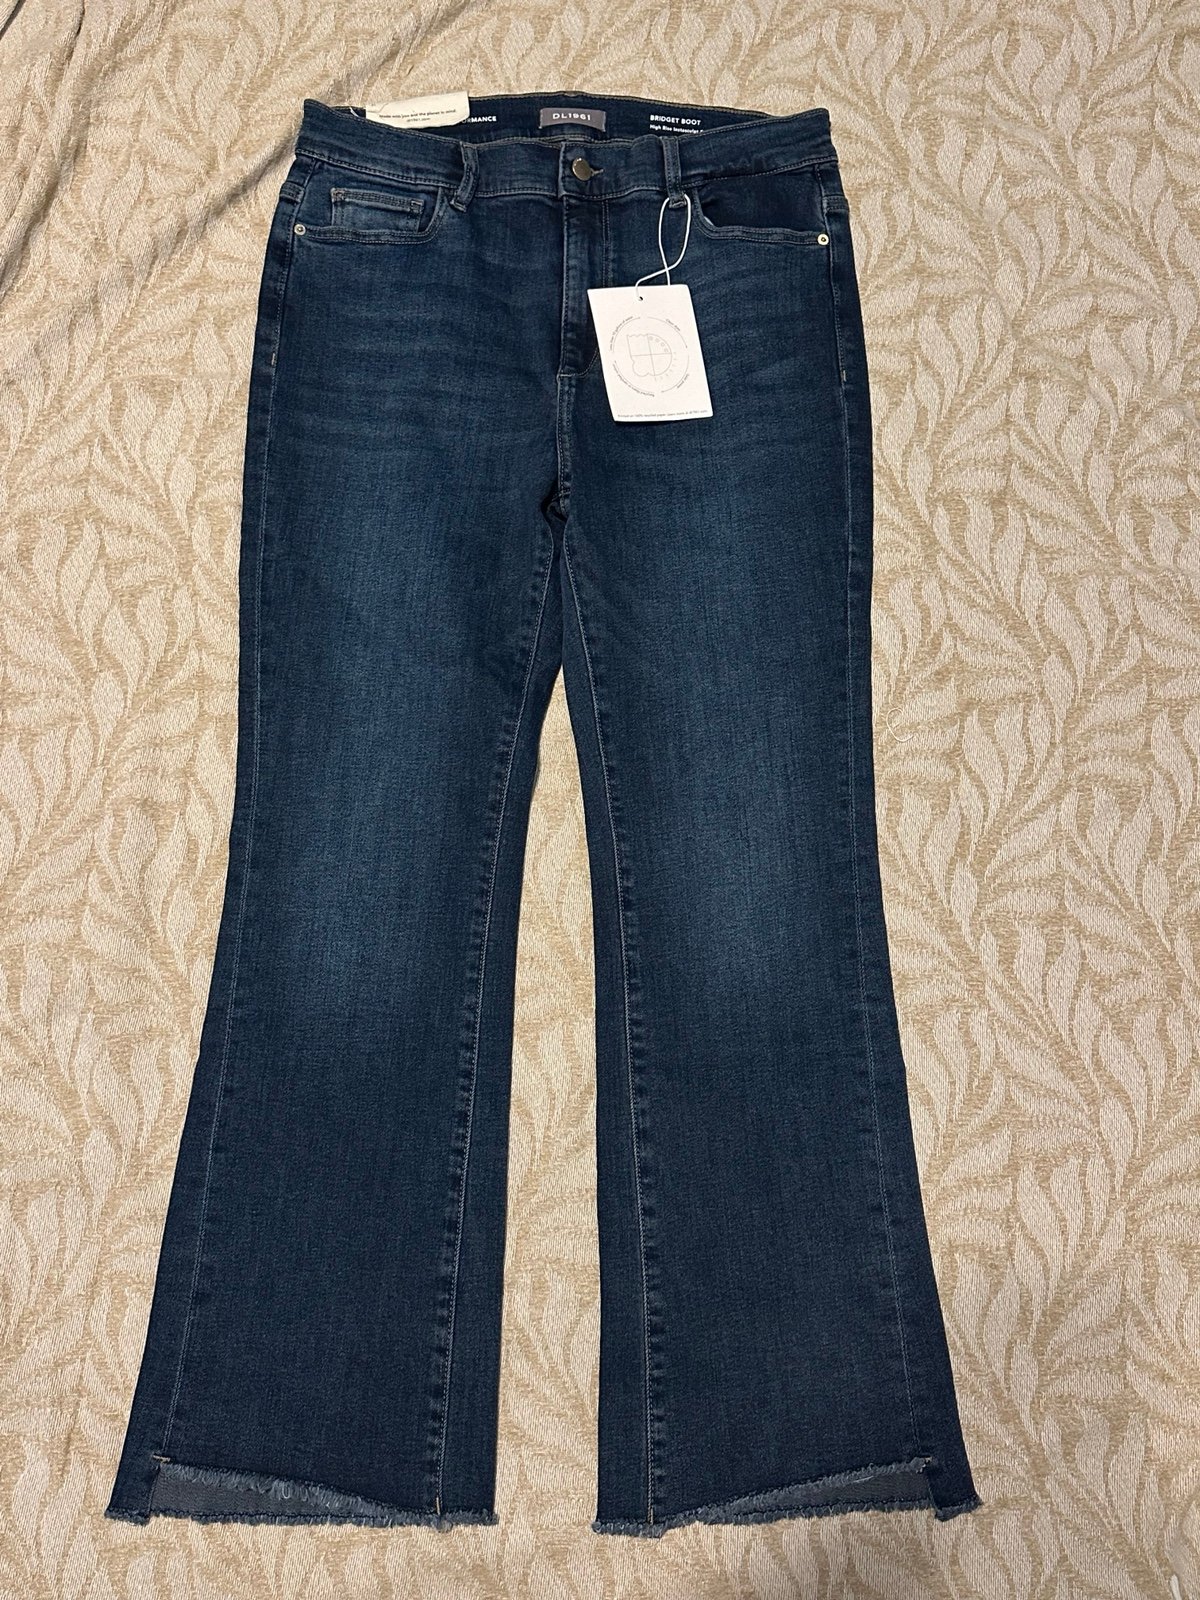 Gorgeous NEW DL1961 Jeans oviicTABC outlet online shop